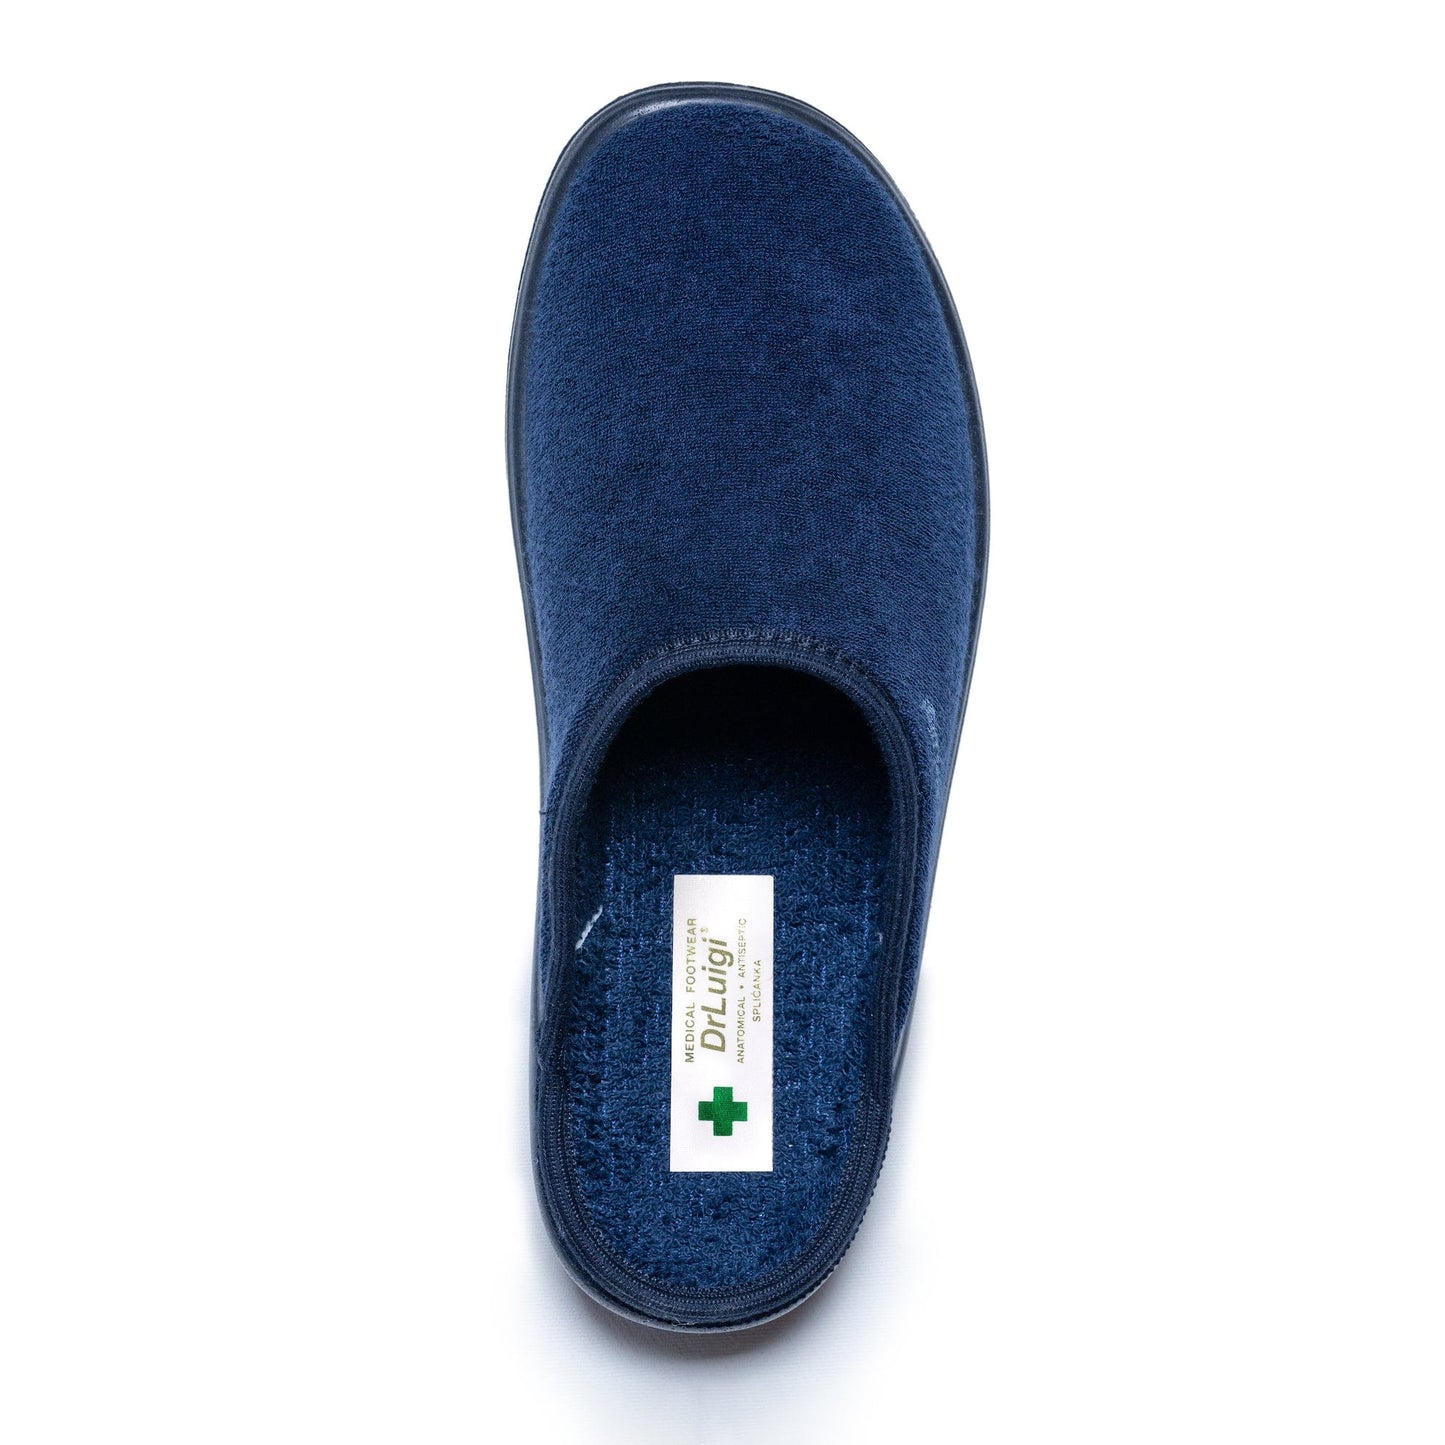 DRLUIGI MEDICAL FOOTWEAR FOR MEN PU-01-01-TF - NAVY BLUE